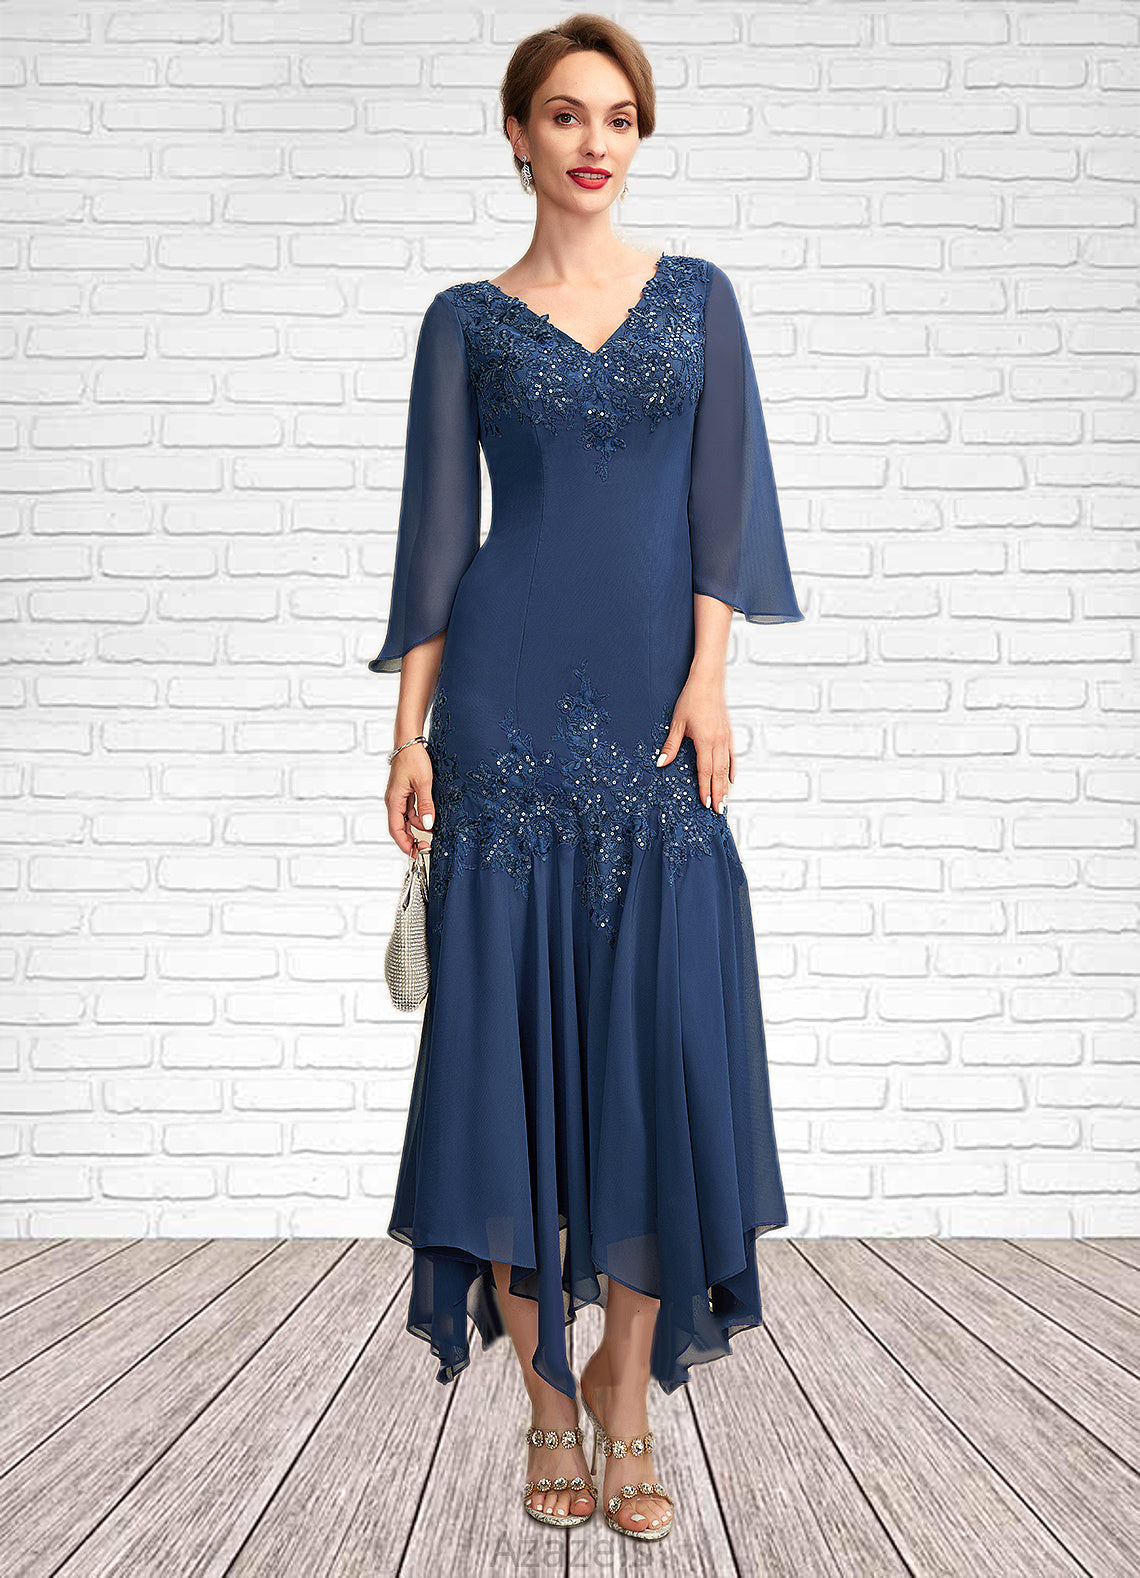 Jacqueline Trumpet/Mermaid V-neck Ankle-Length Chiffon Mother of the Bride Dress With Appliques Lace Sequins DF126P0015009